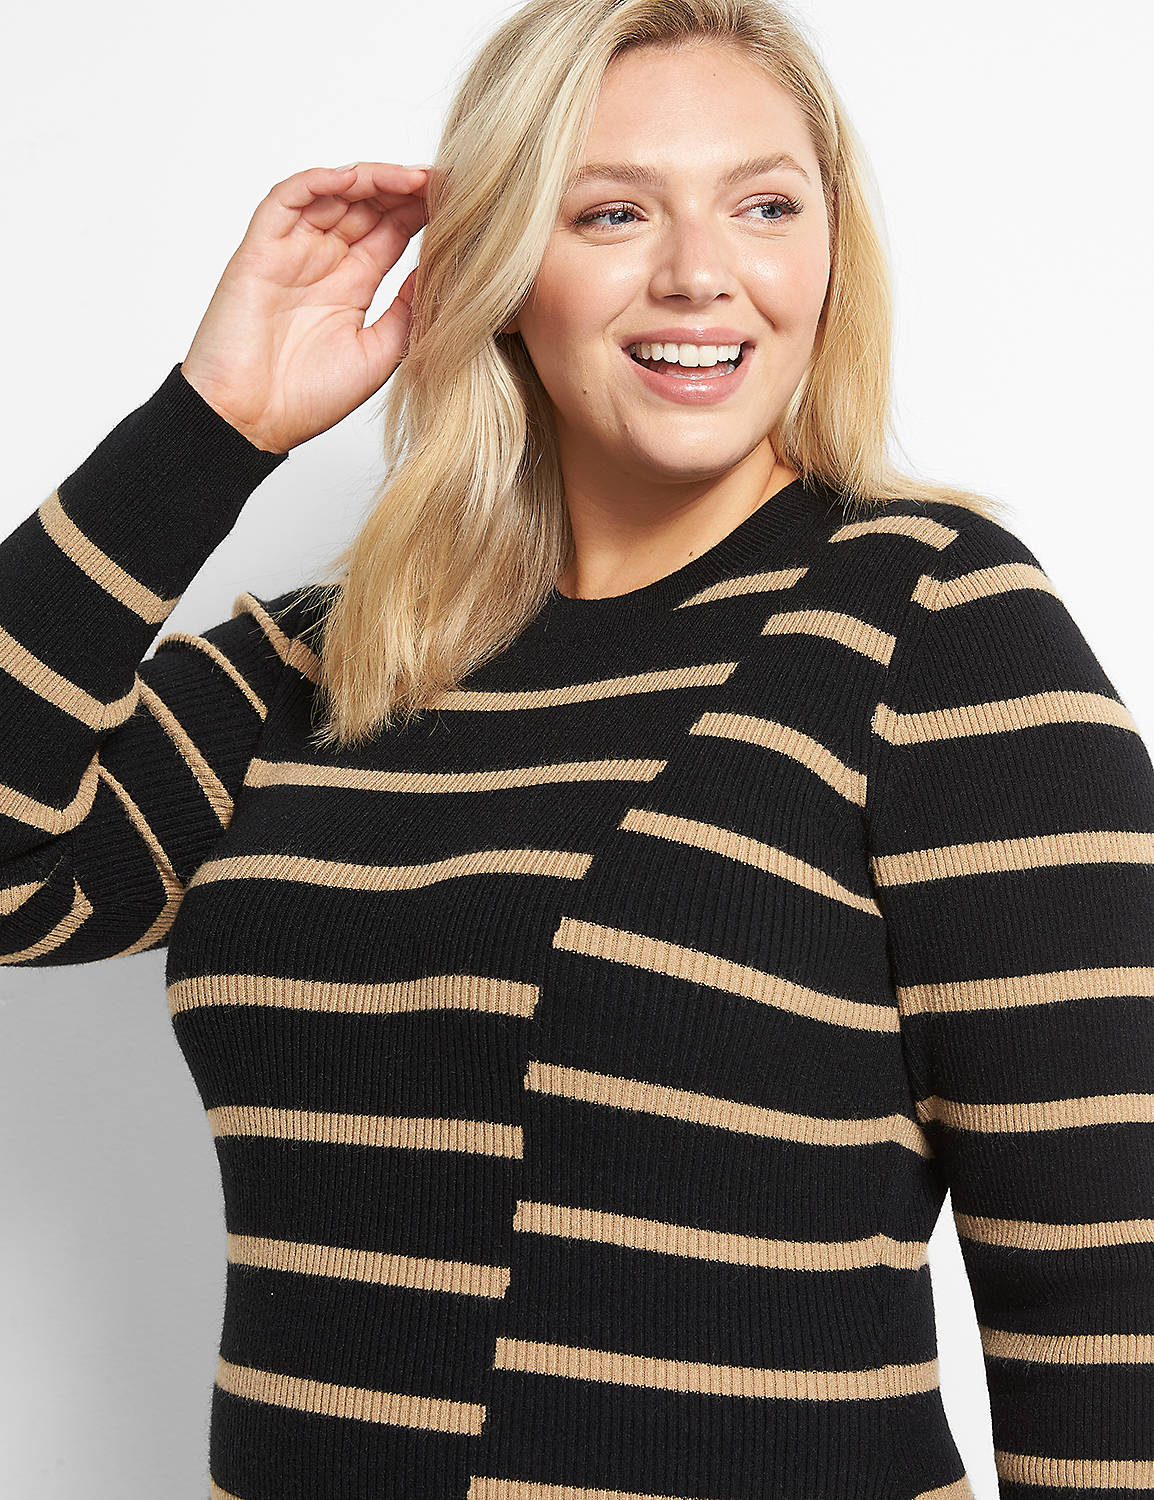 Mixed-Stripe Sweater Dress Product Image 3